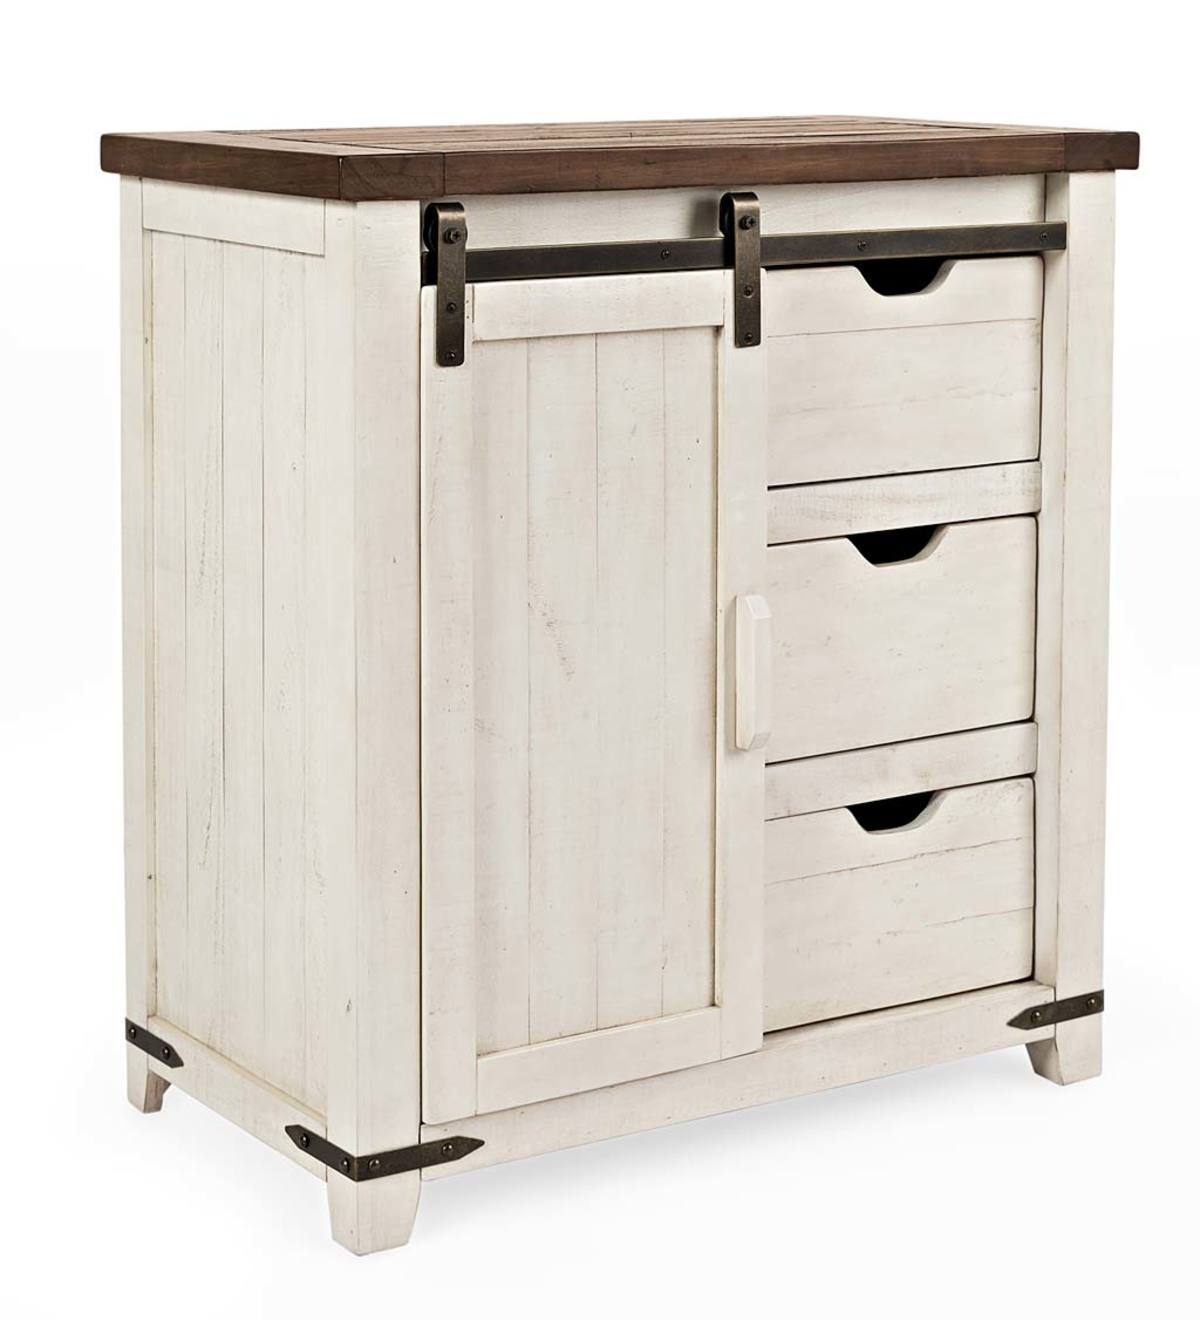 Cape Charles Barn Door Wood Storage Cabinet - White